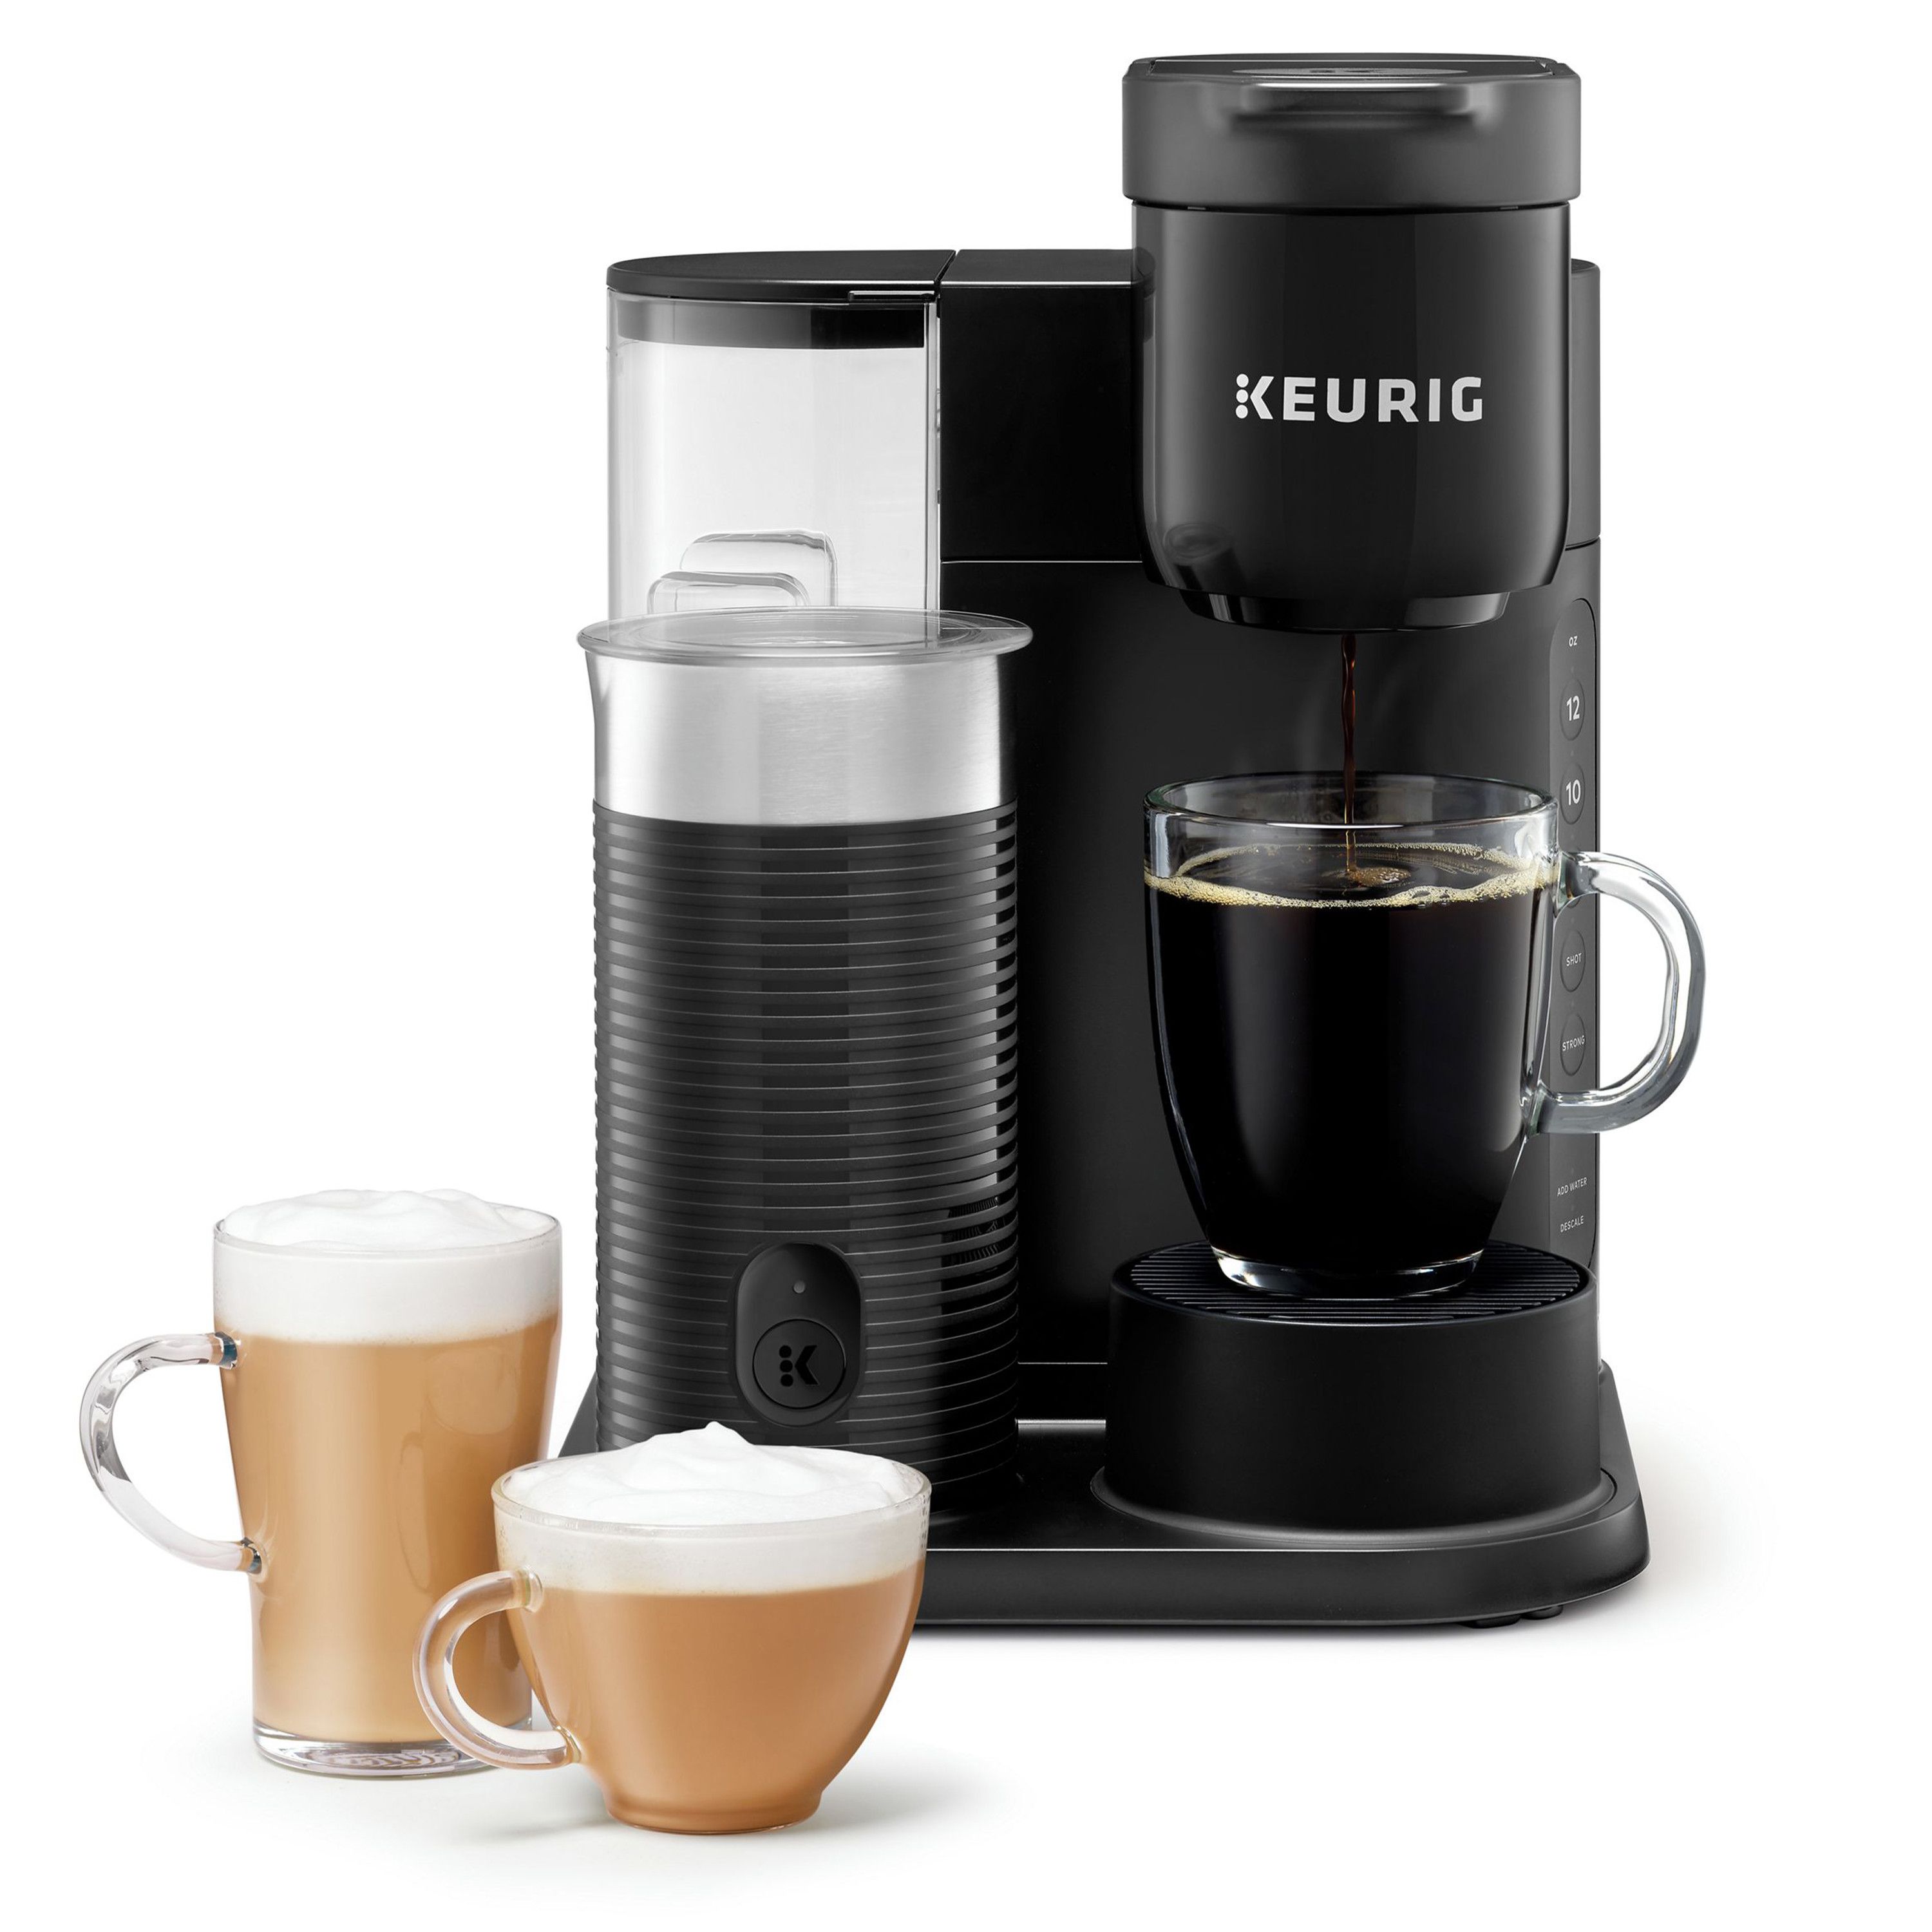 Keurig K-Café Essentials Single Serve K-Cup Pod Coffee Maker, Black | Walmart (US)